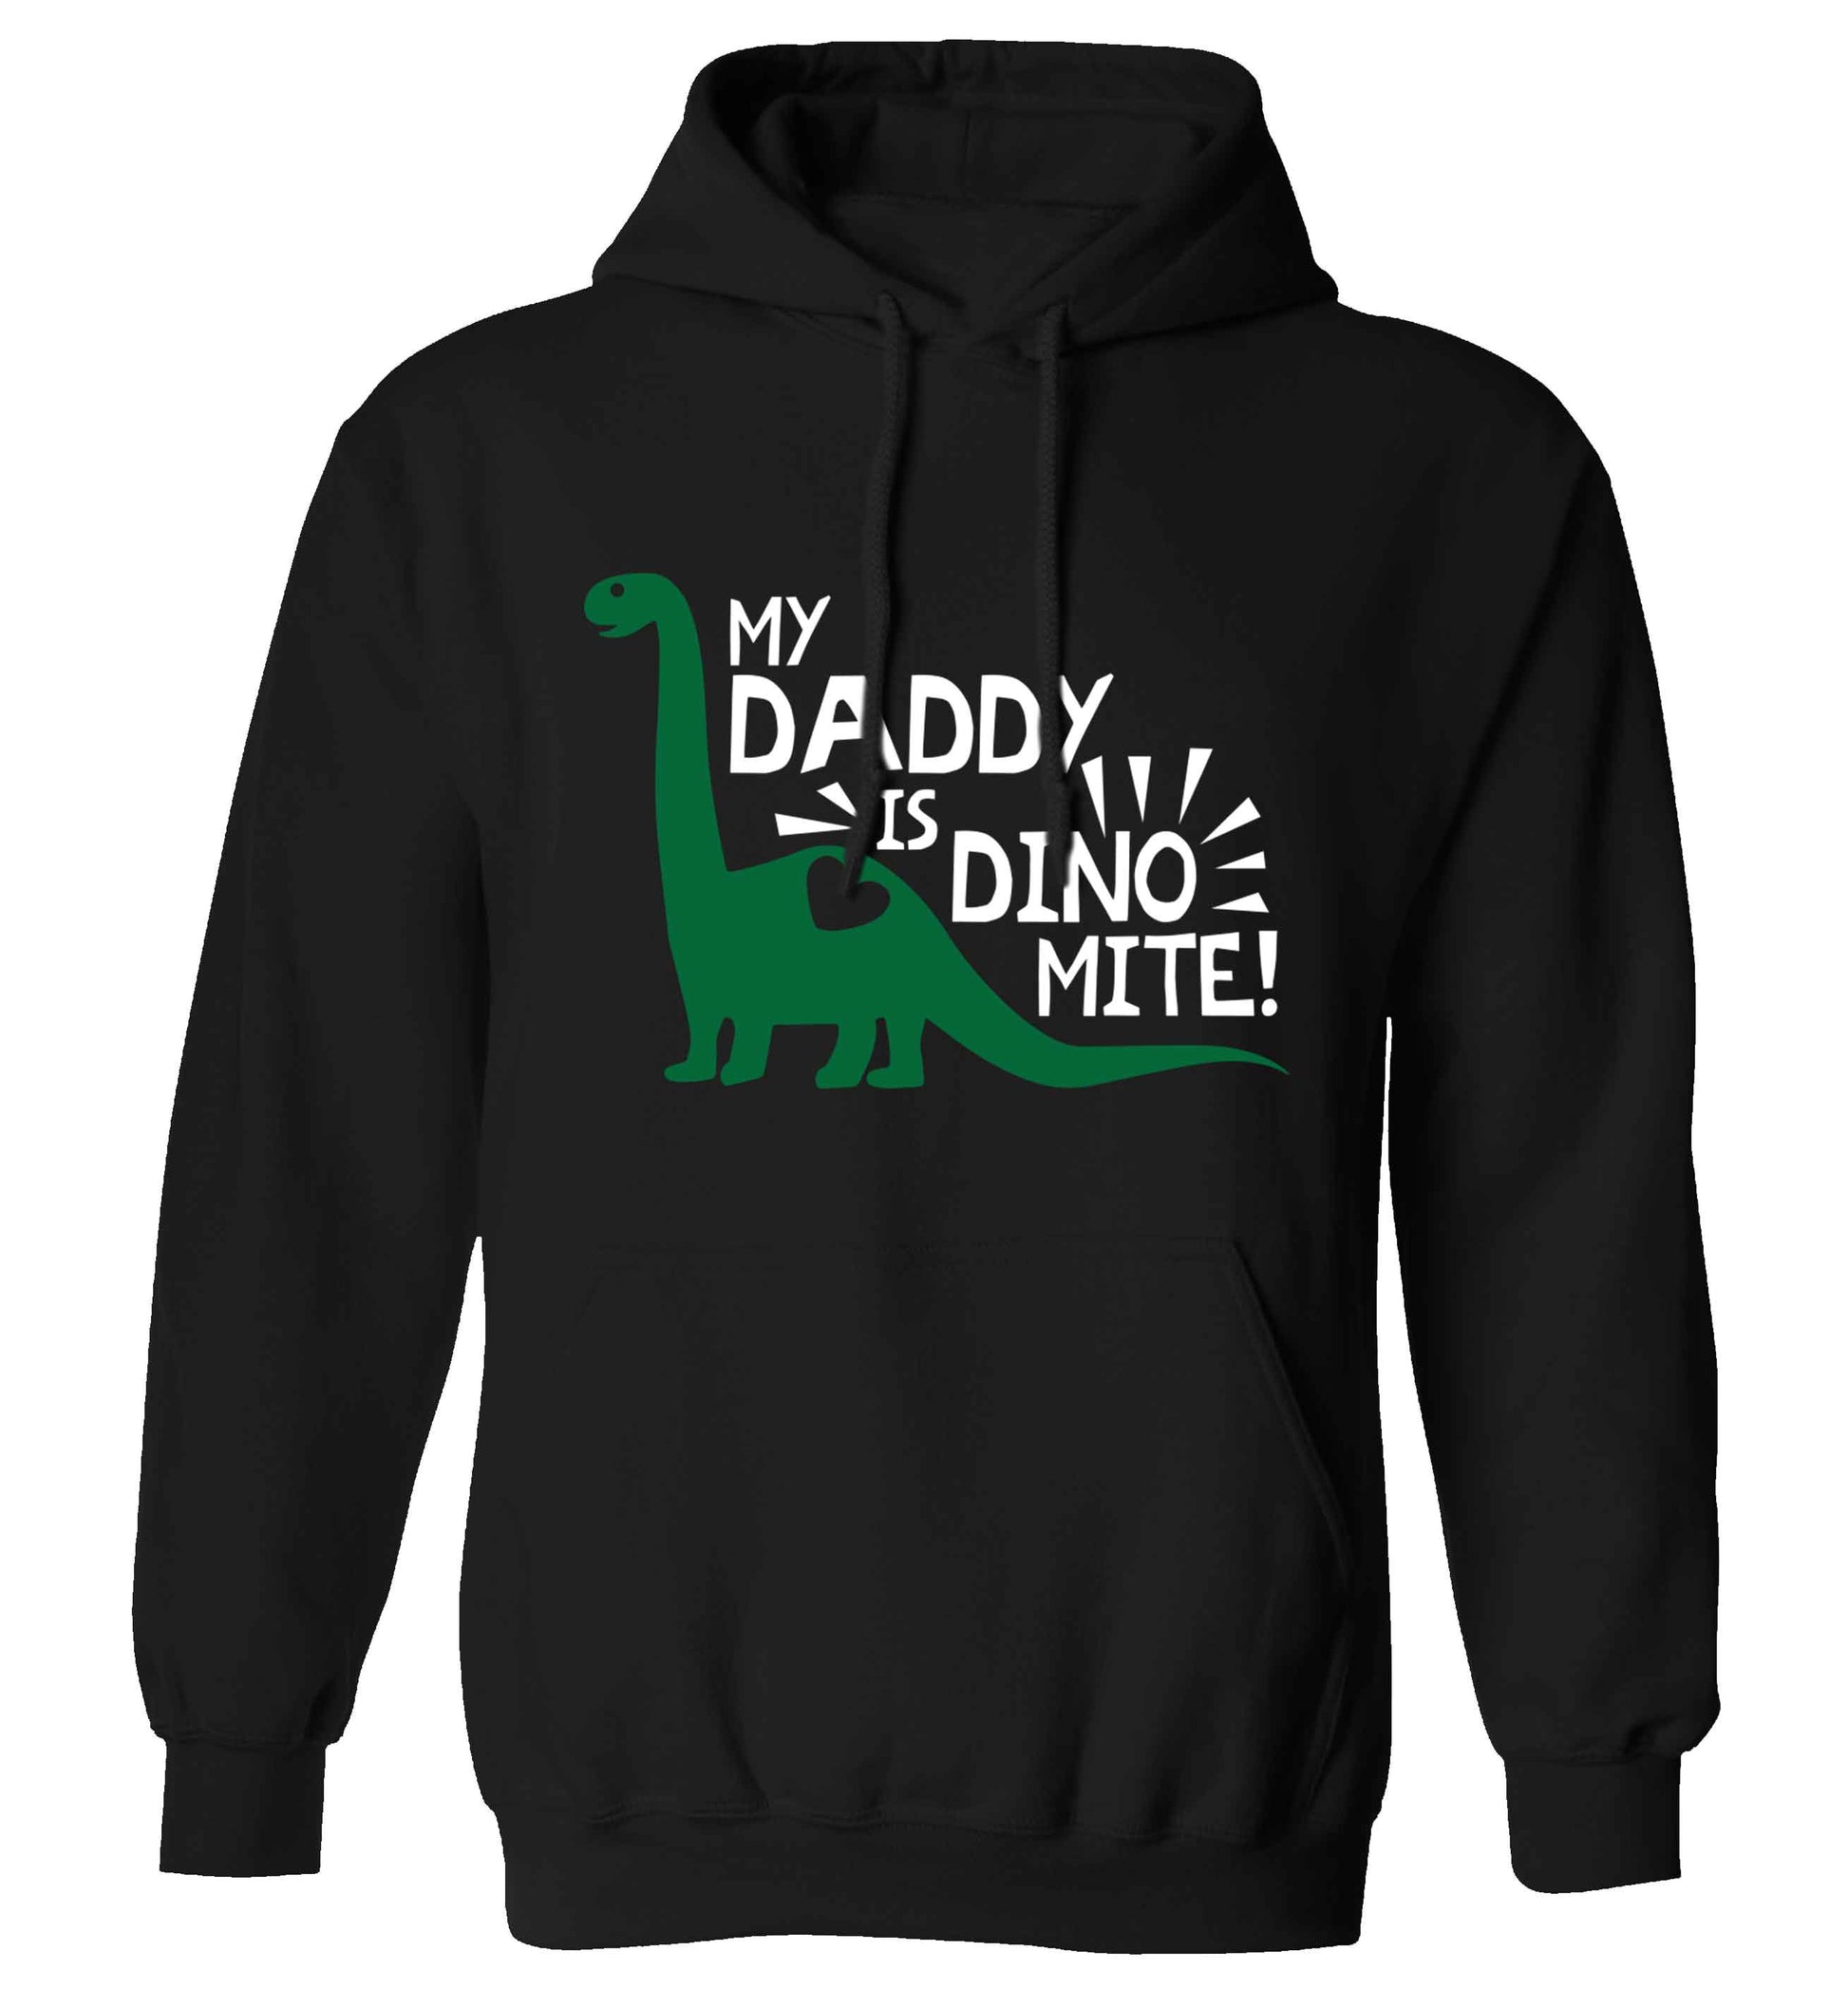 My daddy is dinomite! adults unisex black hoodie 2XL